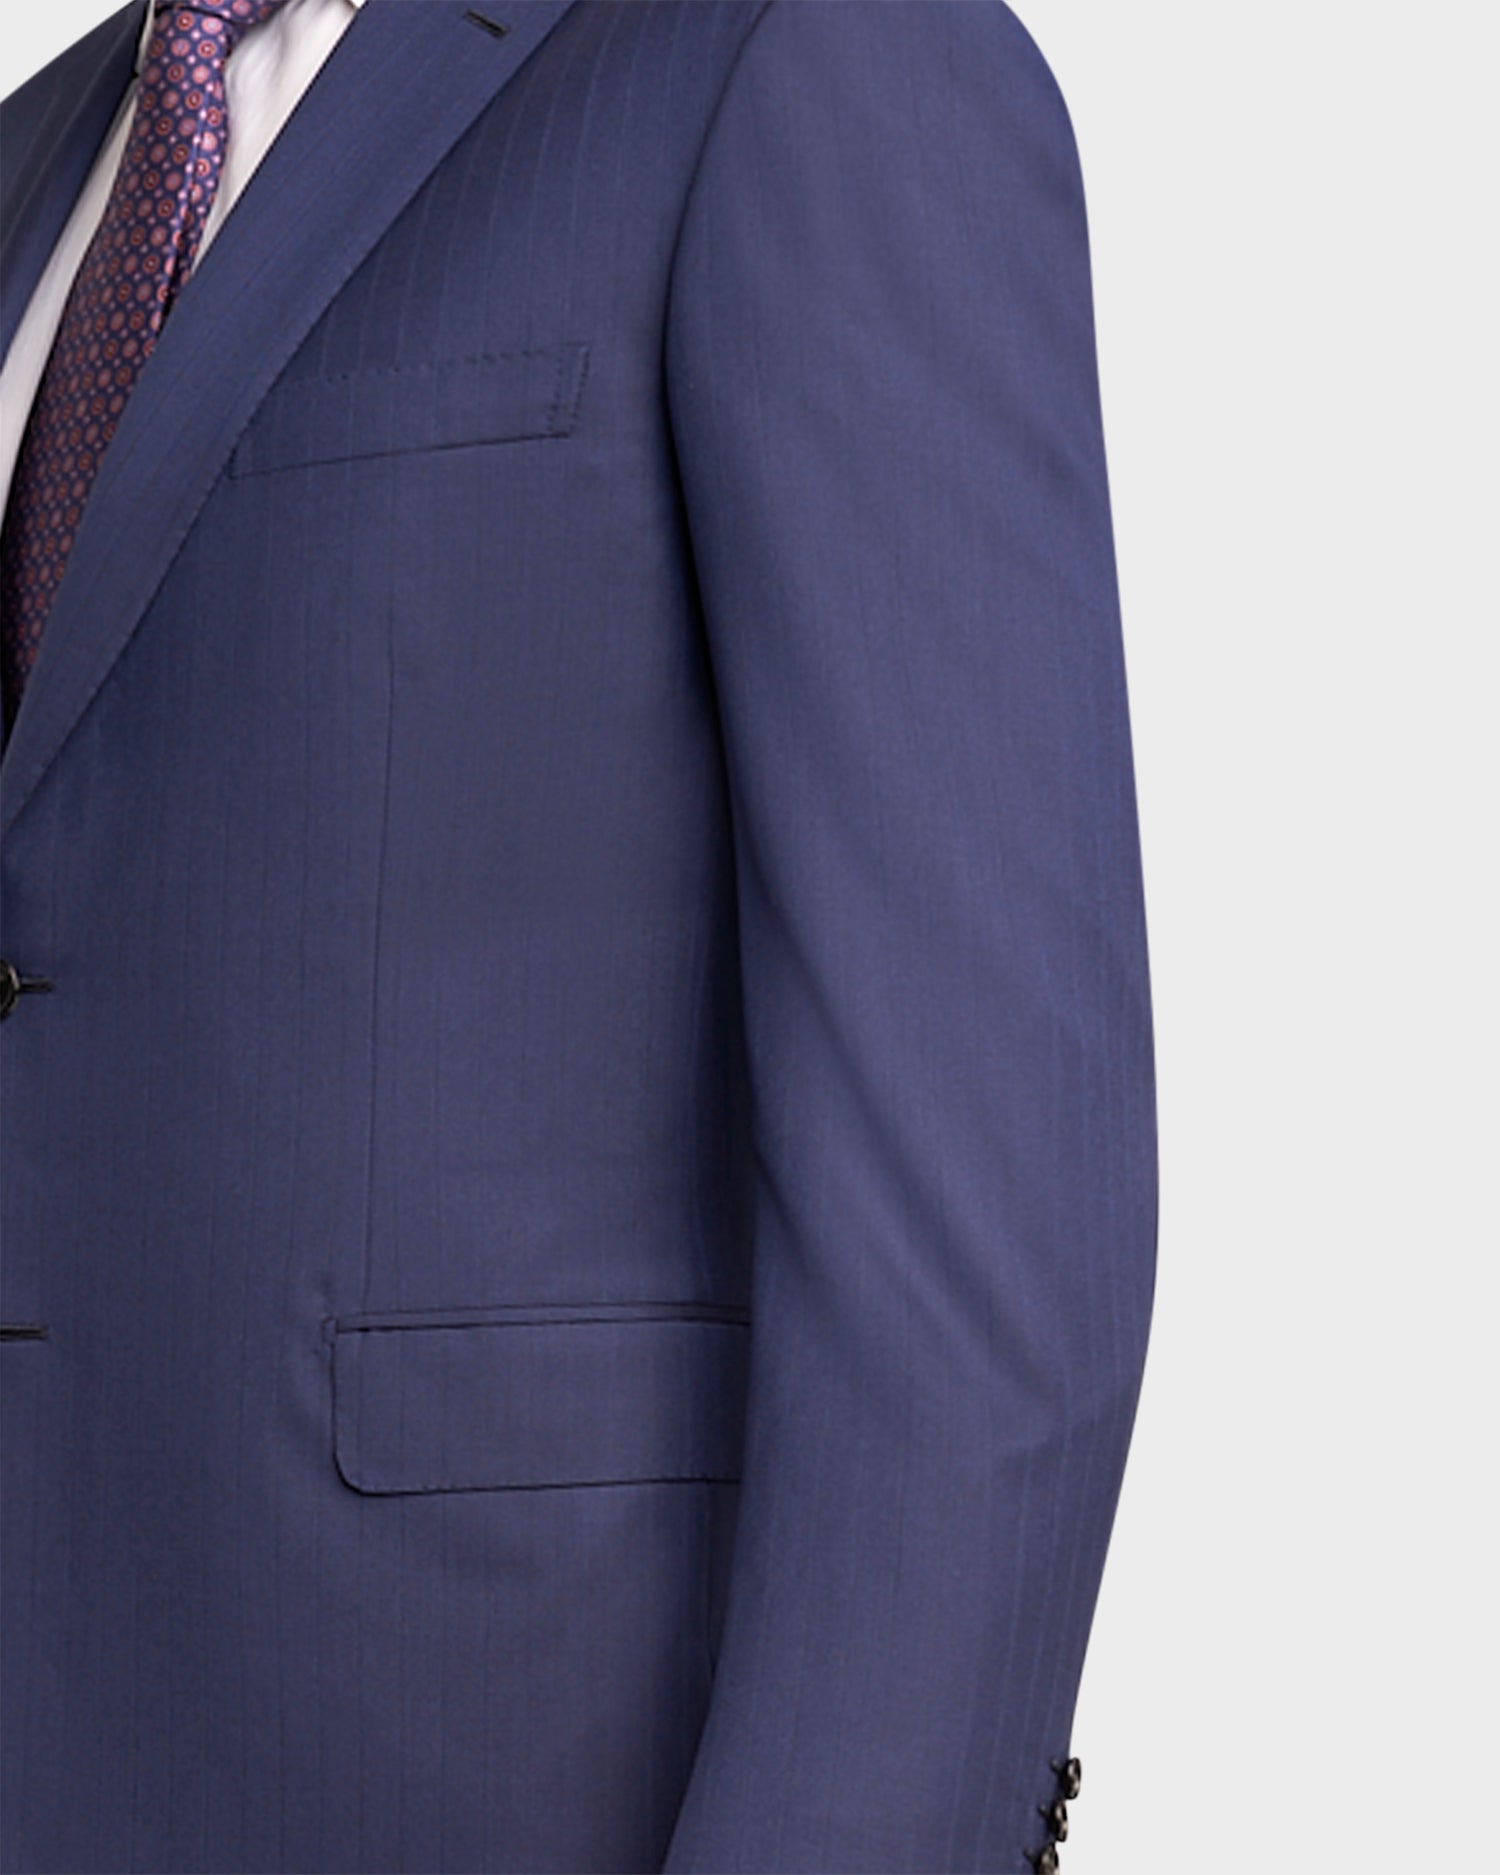 Blue Pinstripe Pure Wool Suit